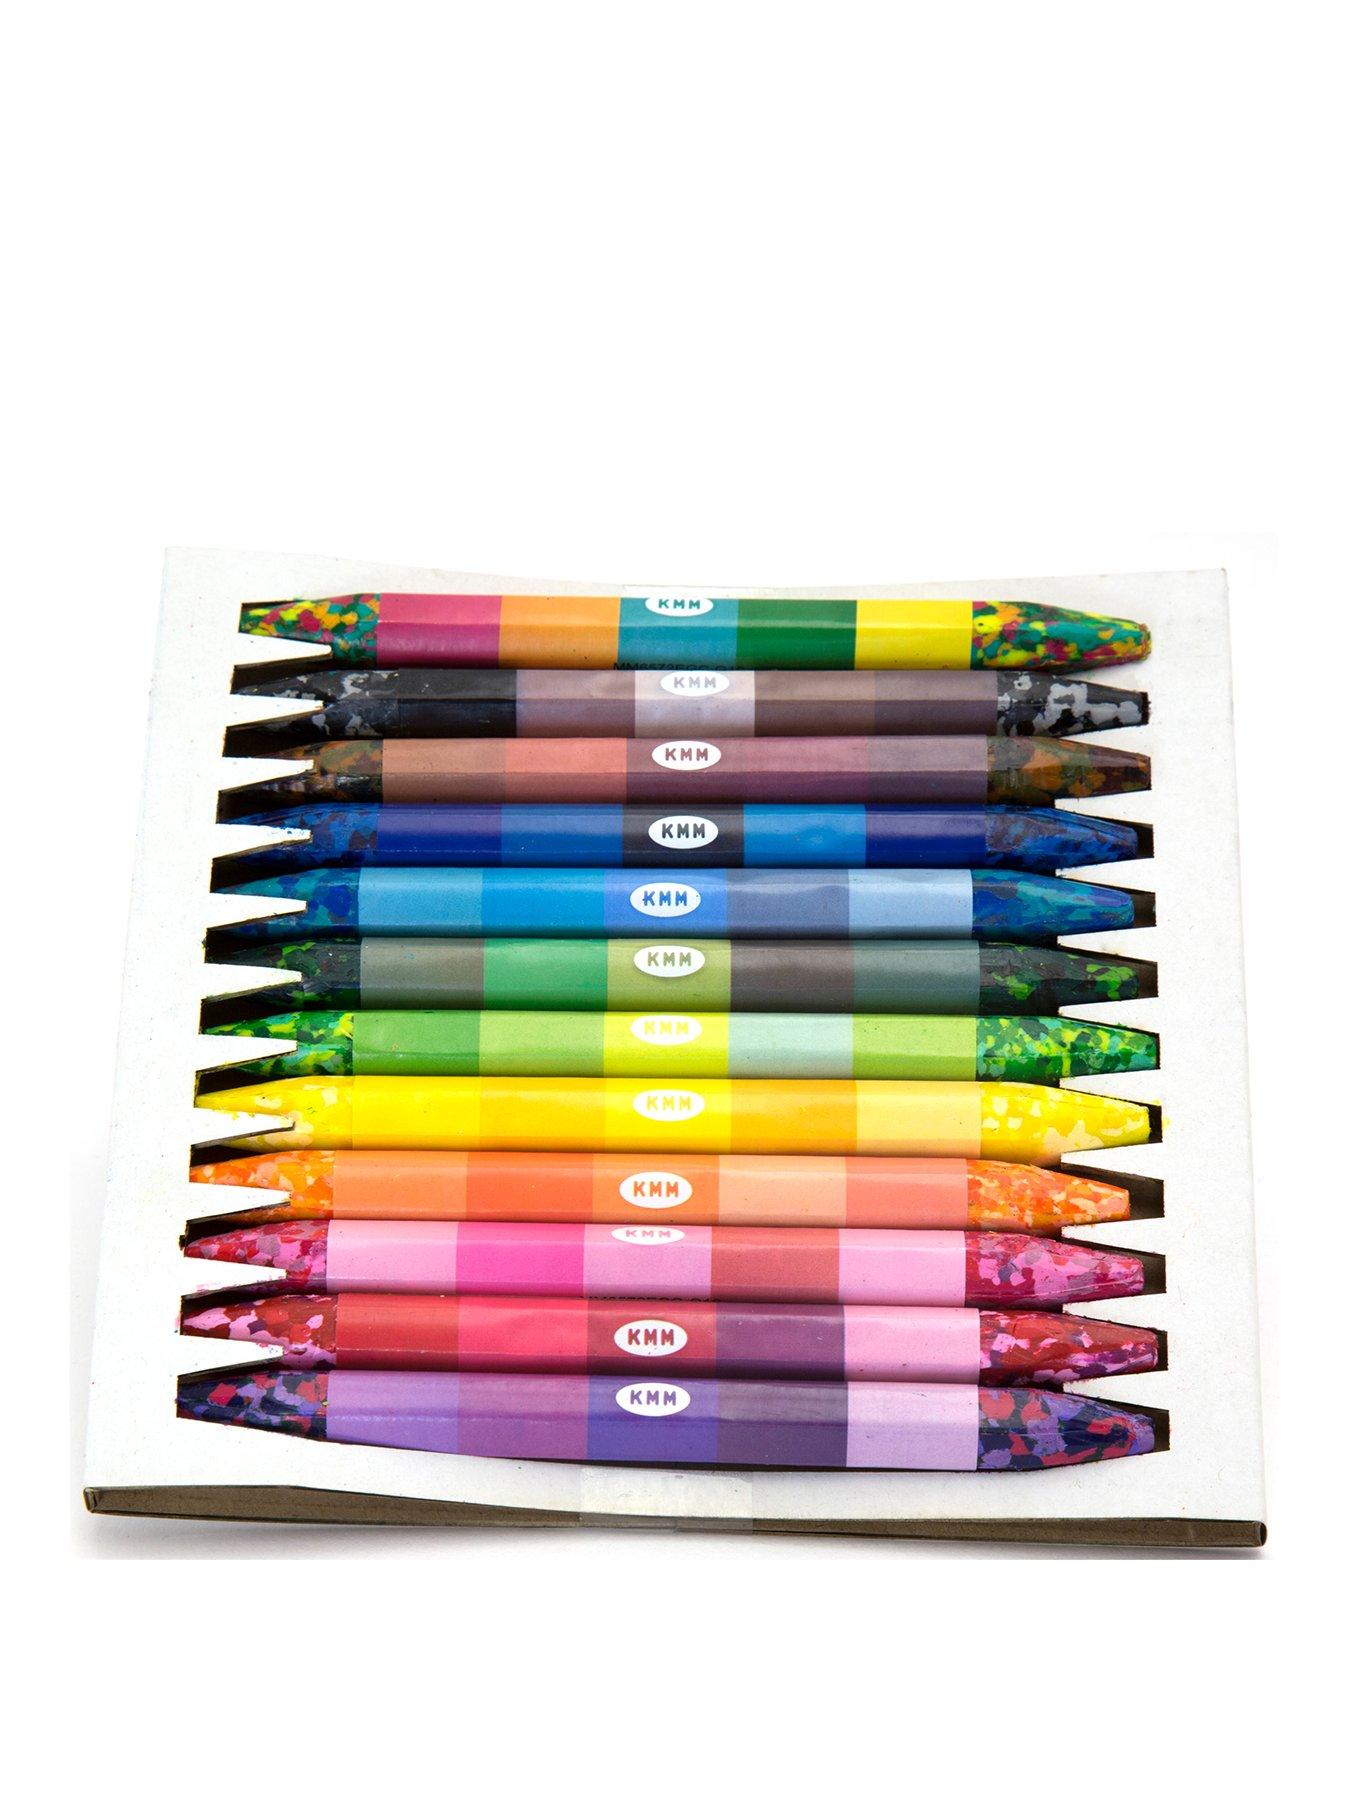 https://media.very.ie/i/littlewoodsireland/RFFDY_SQ1_0000000088_NO_COLOR_SLf/kid-made-modern-confetti-crayons.jpg?$180x240_retinamobilex2$&$roundel_lwireland$&p1_img=vsp_pink